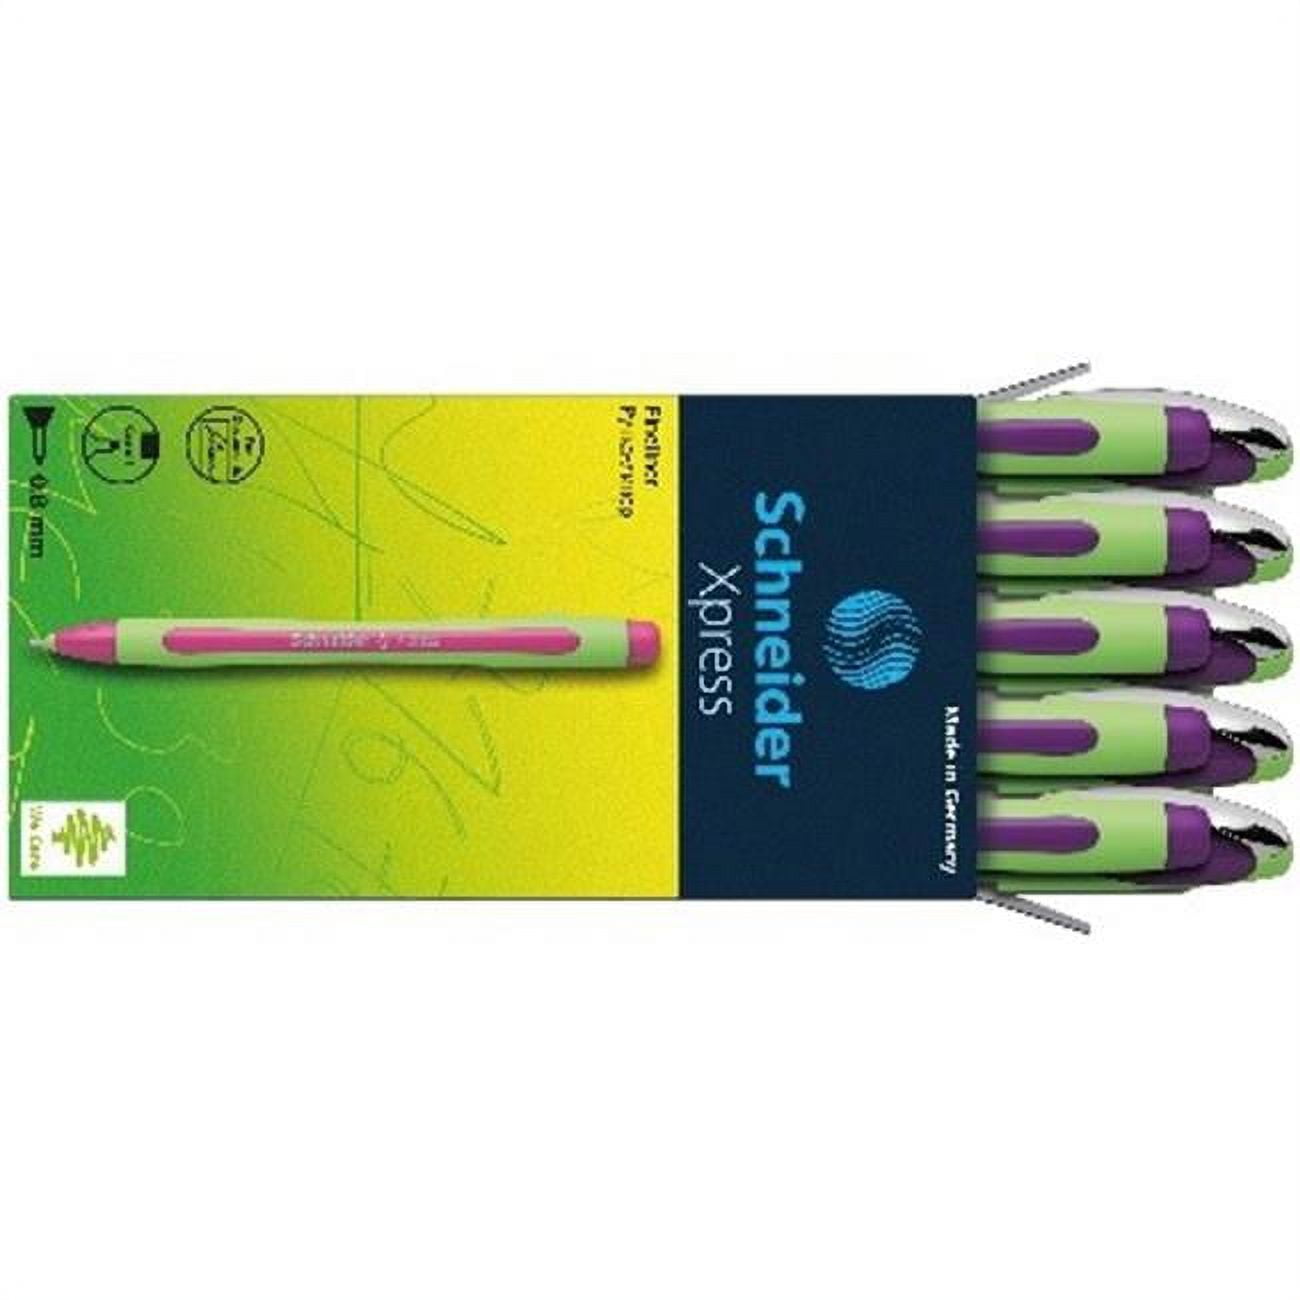 Scribble Stuff 15ct On Points Felt Pens Kit, Assorted Tips, Felt Pens, 3  different pen sizes in one kit, 5 fine, 5 medium and 5 bold pens.